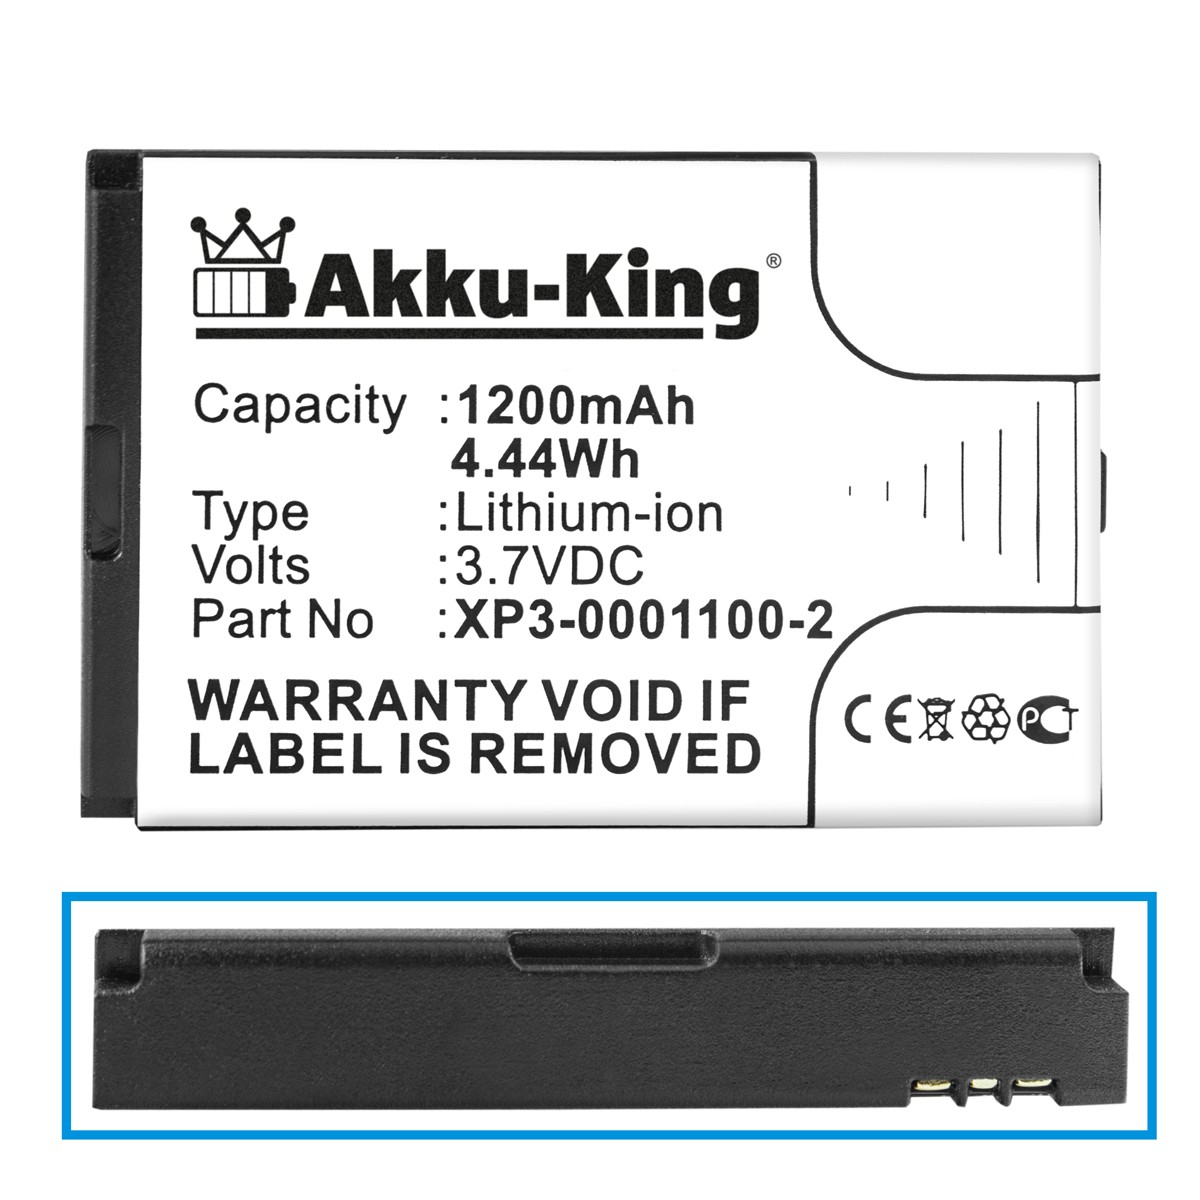 AKKU-KING Akku XP3-0001100-2 Li-Ion mit 3.7 1200mAh Socketmobile Handy-Akku, Volt, kompatibel